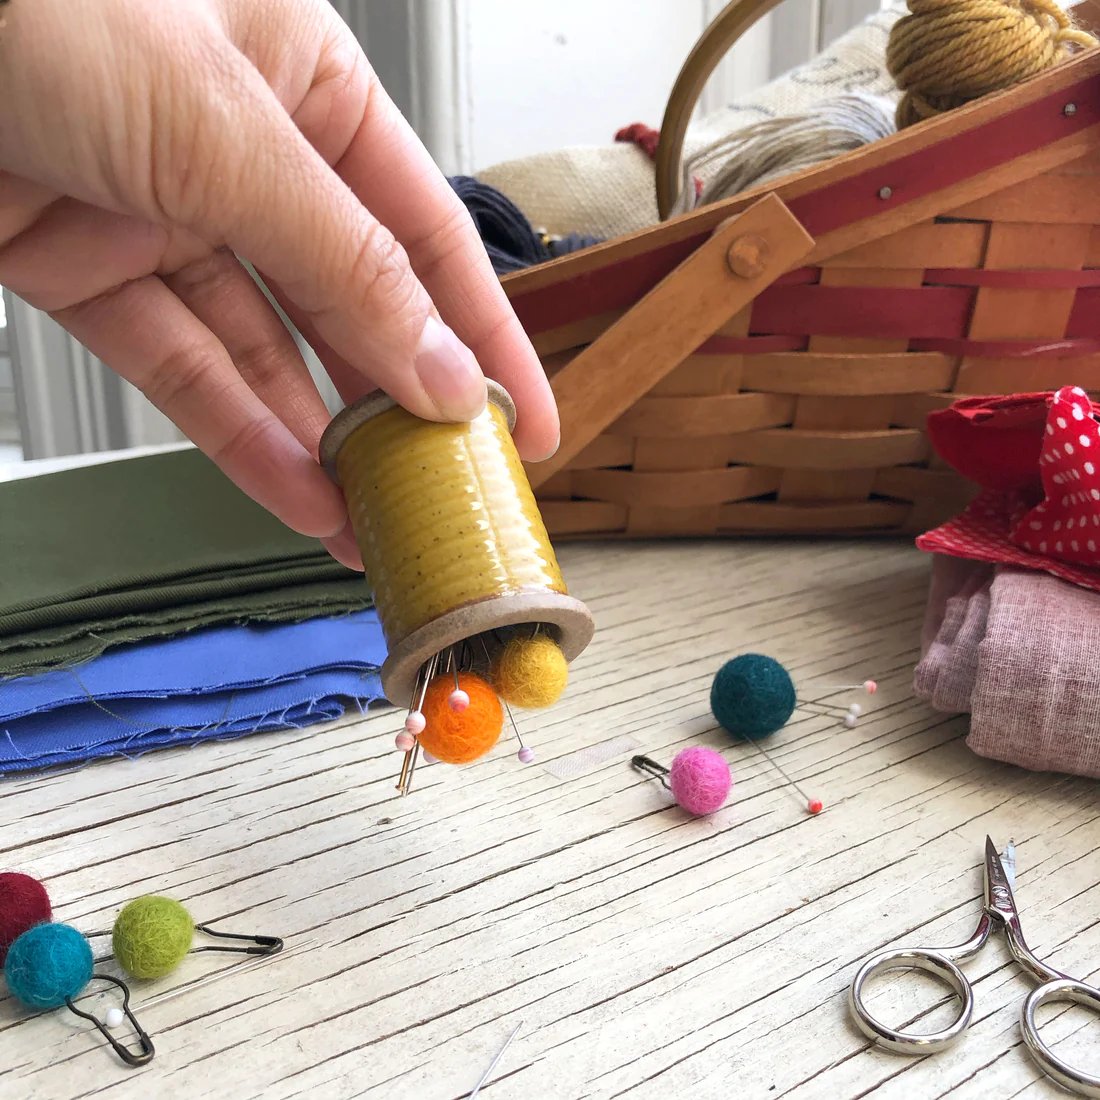 Magnetic Keepers for Knitting Supplies – Ewe Ewe Yarns